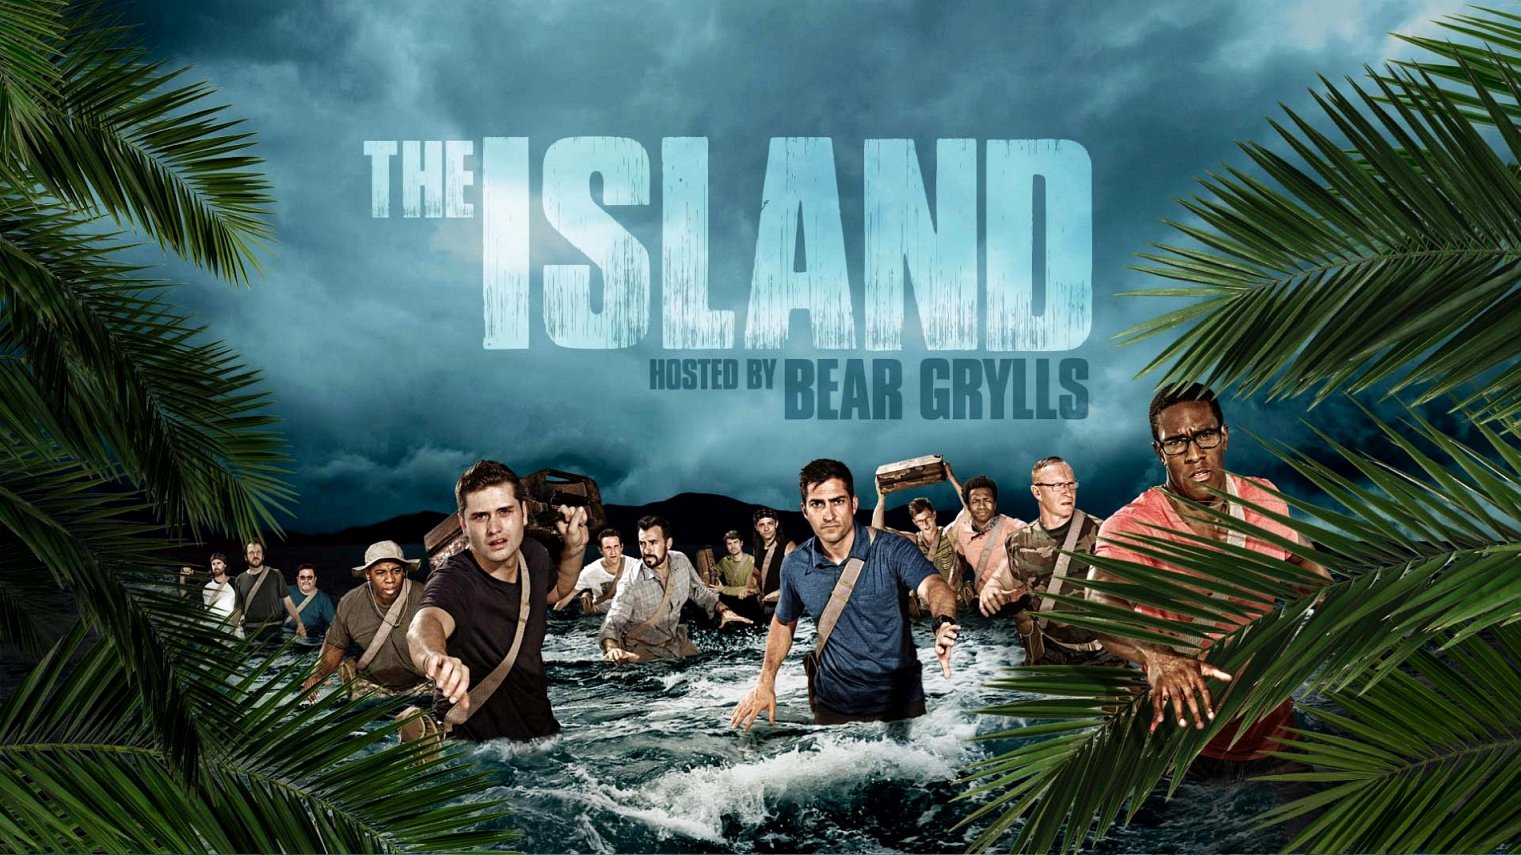 cast of The Island season 1